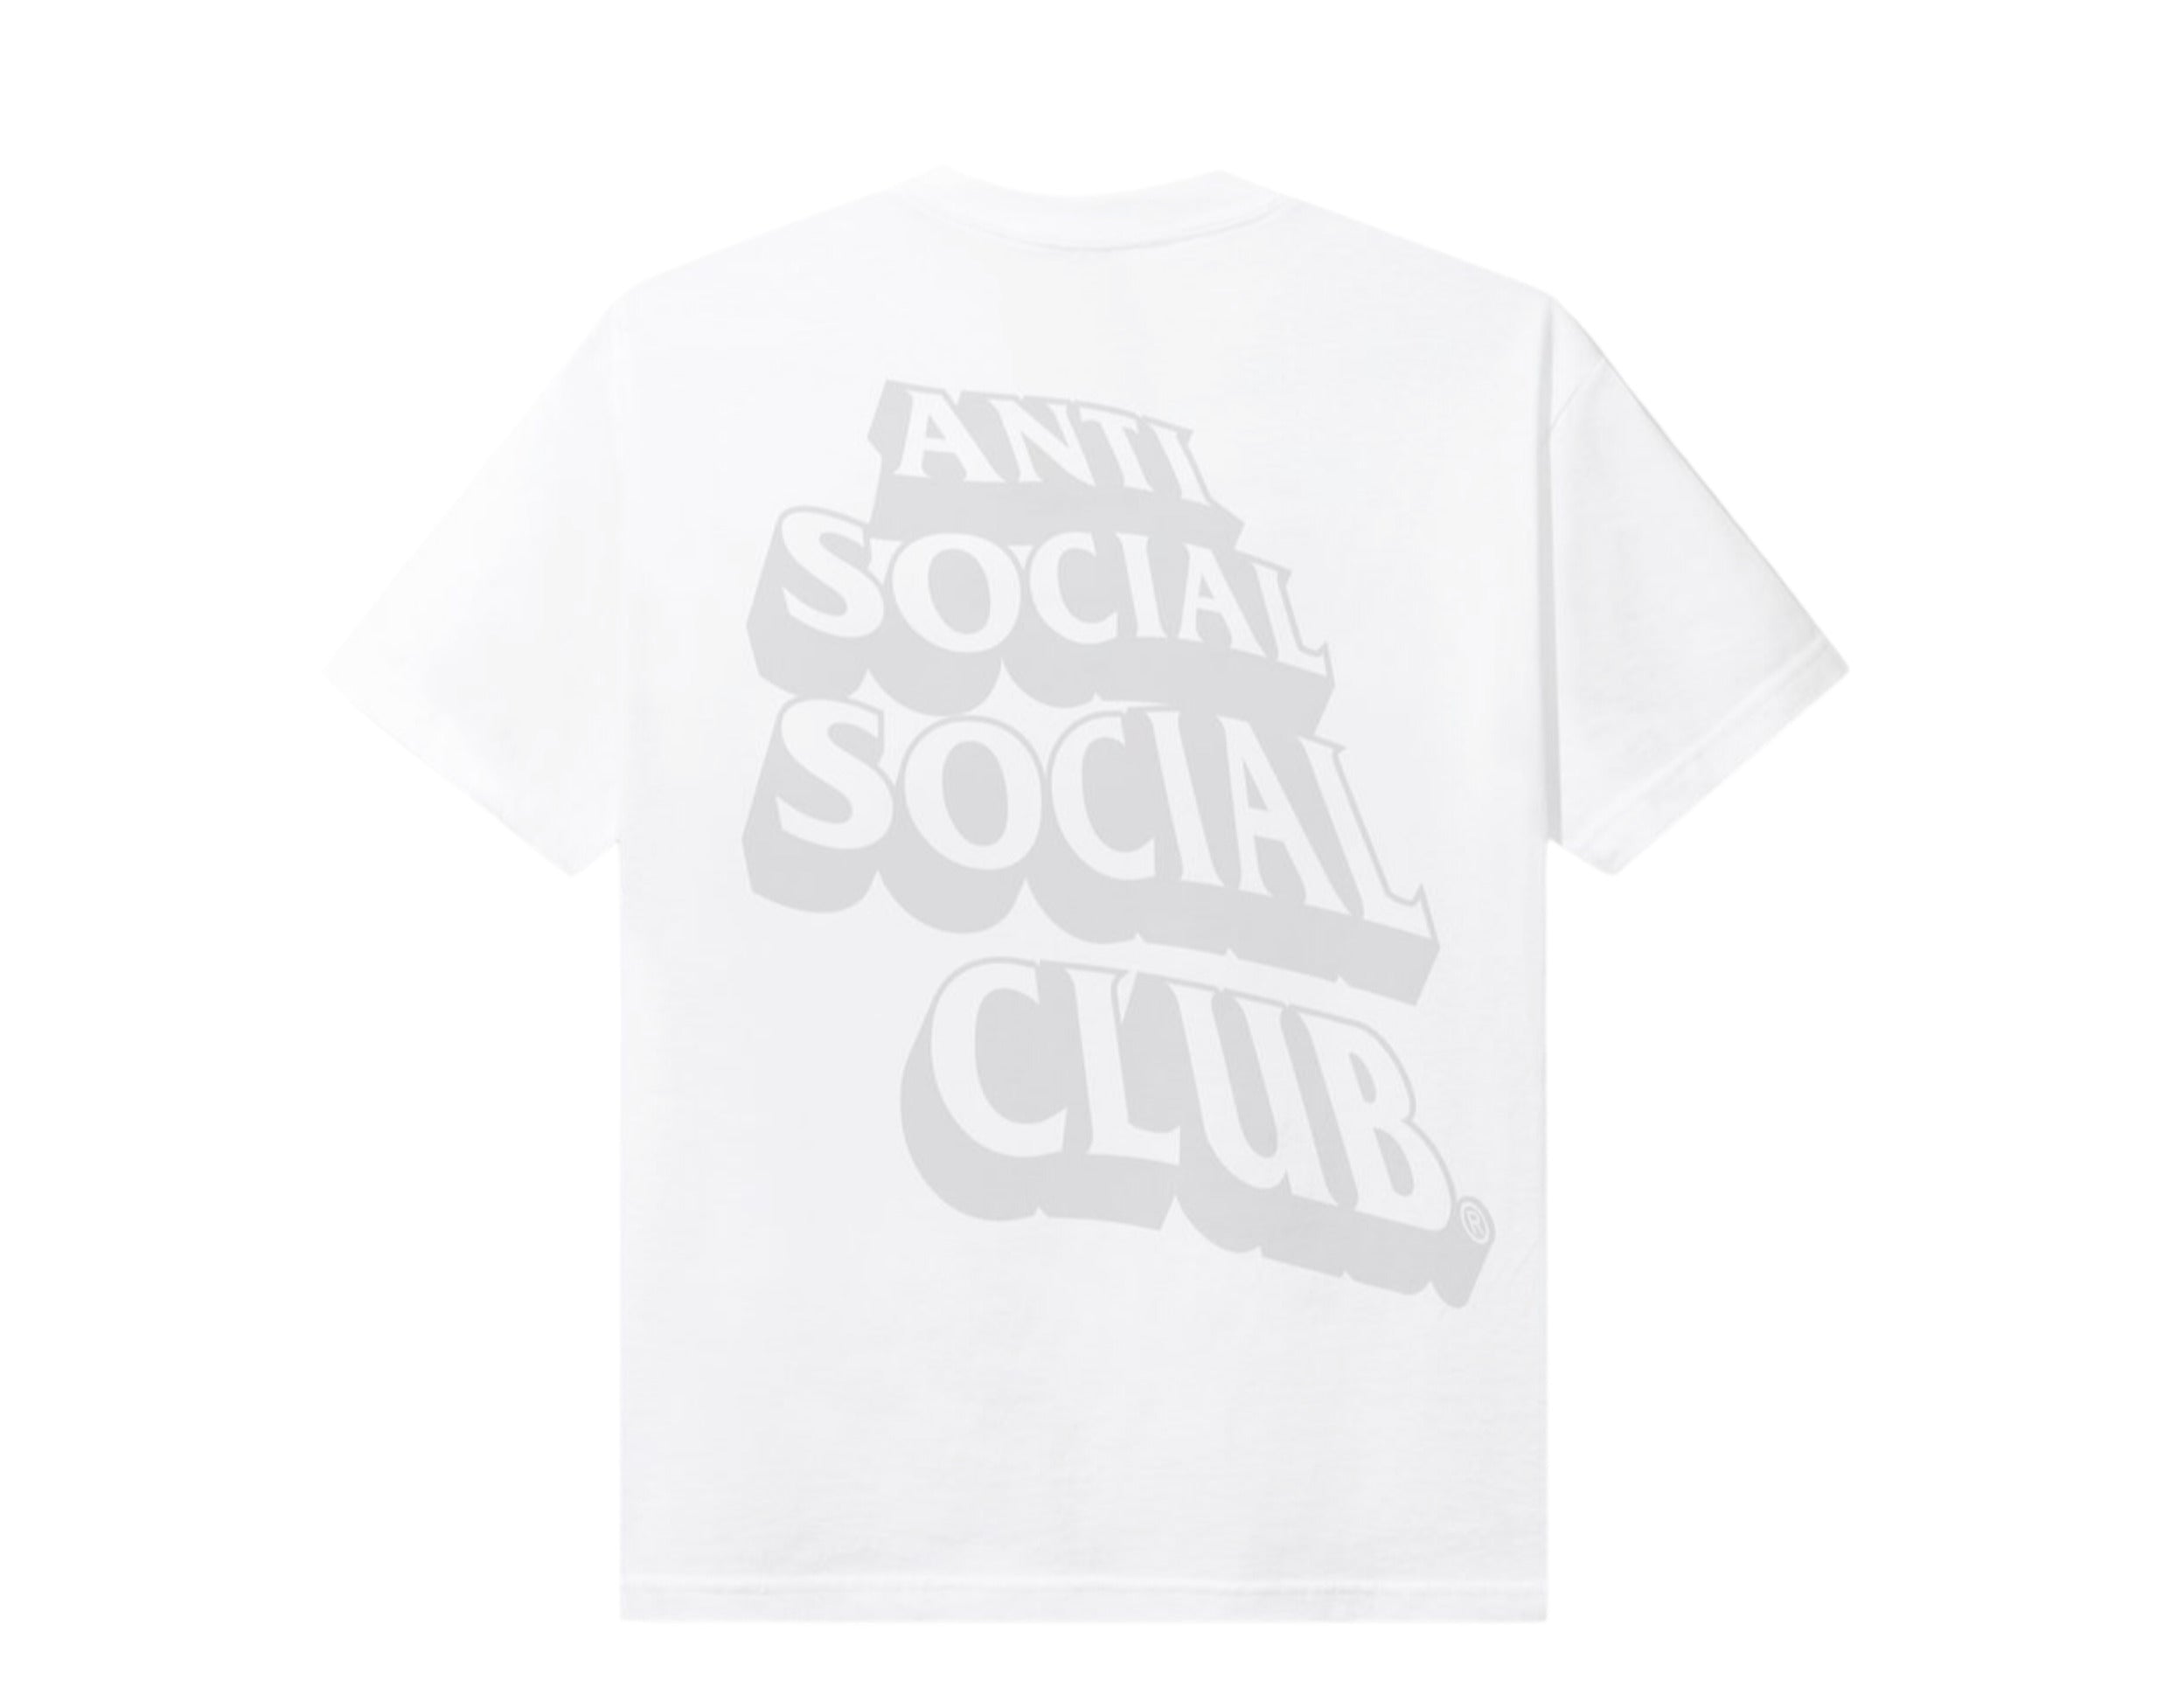 Anti Social Social Club Everywhere You Look White Tee